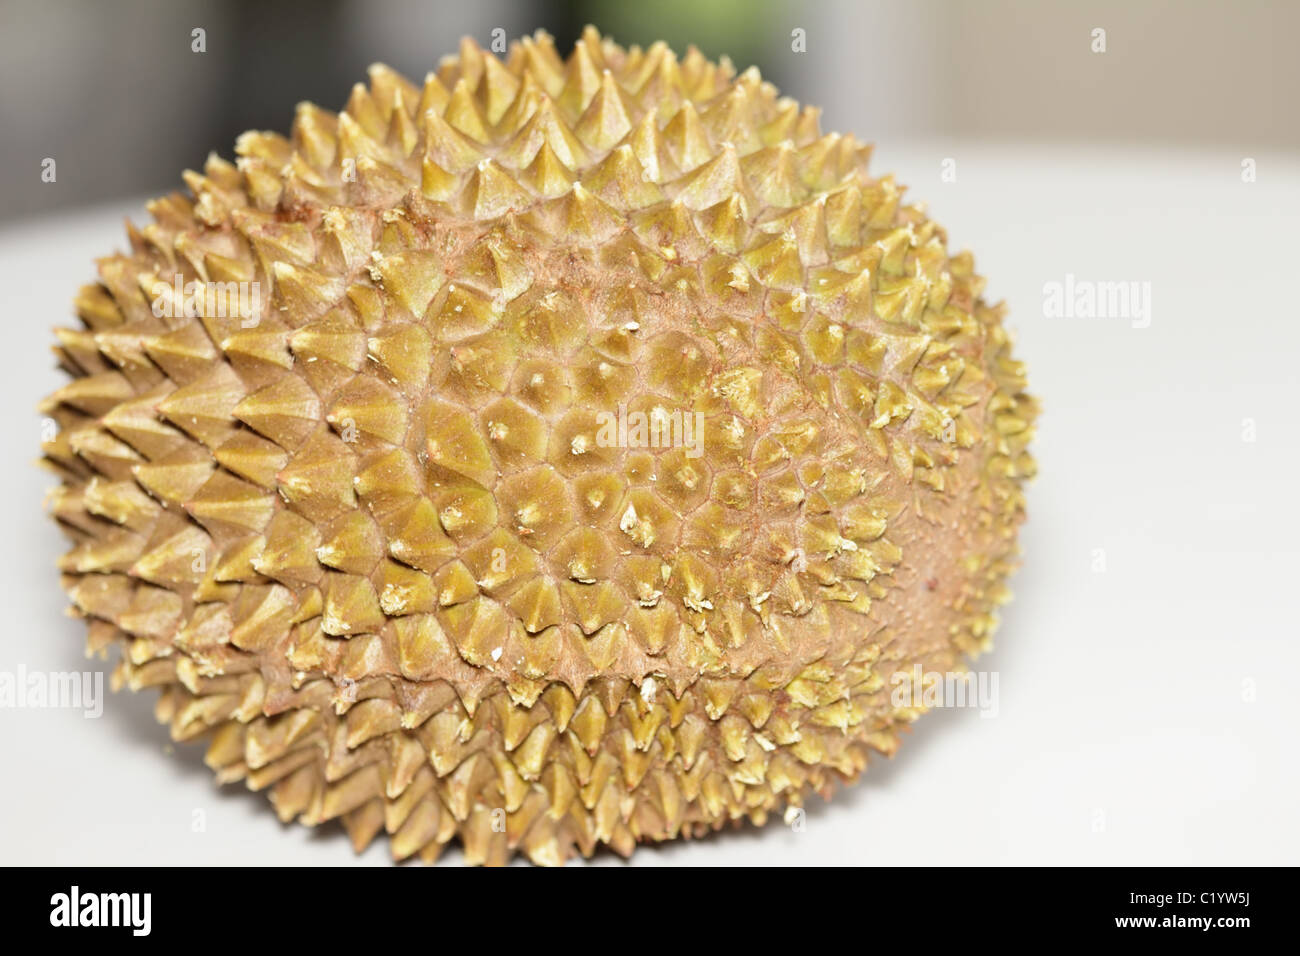 Spiky Durian on White Table Stock Photo